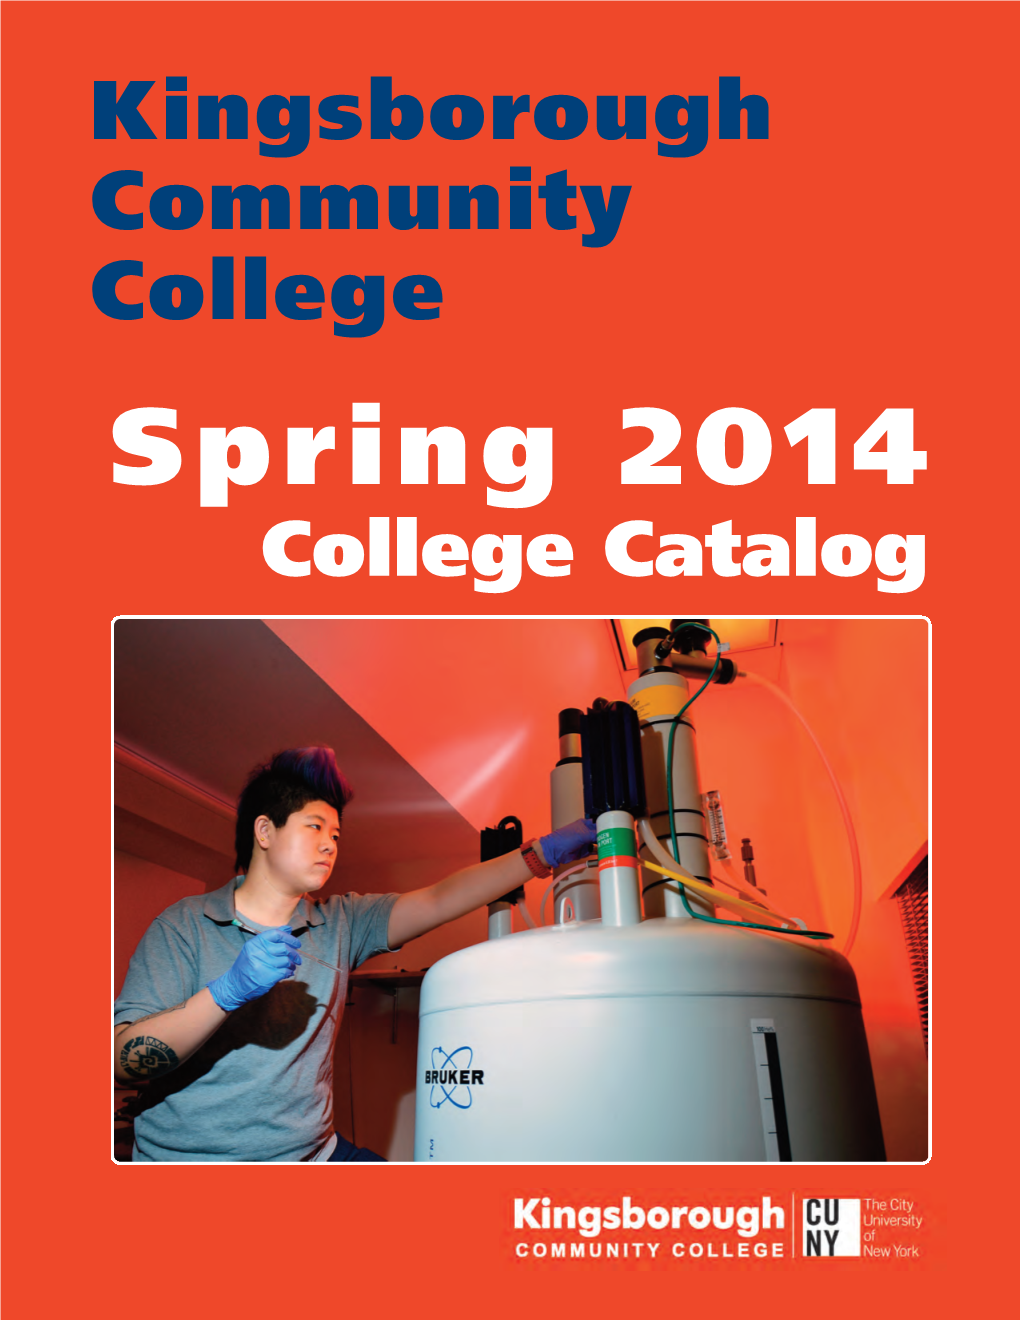 Spring 2014 College Catalog General Information